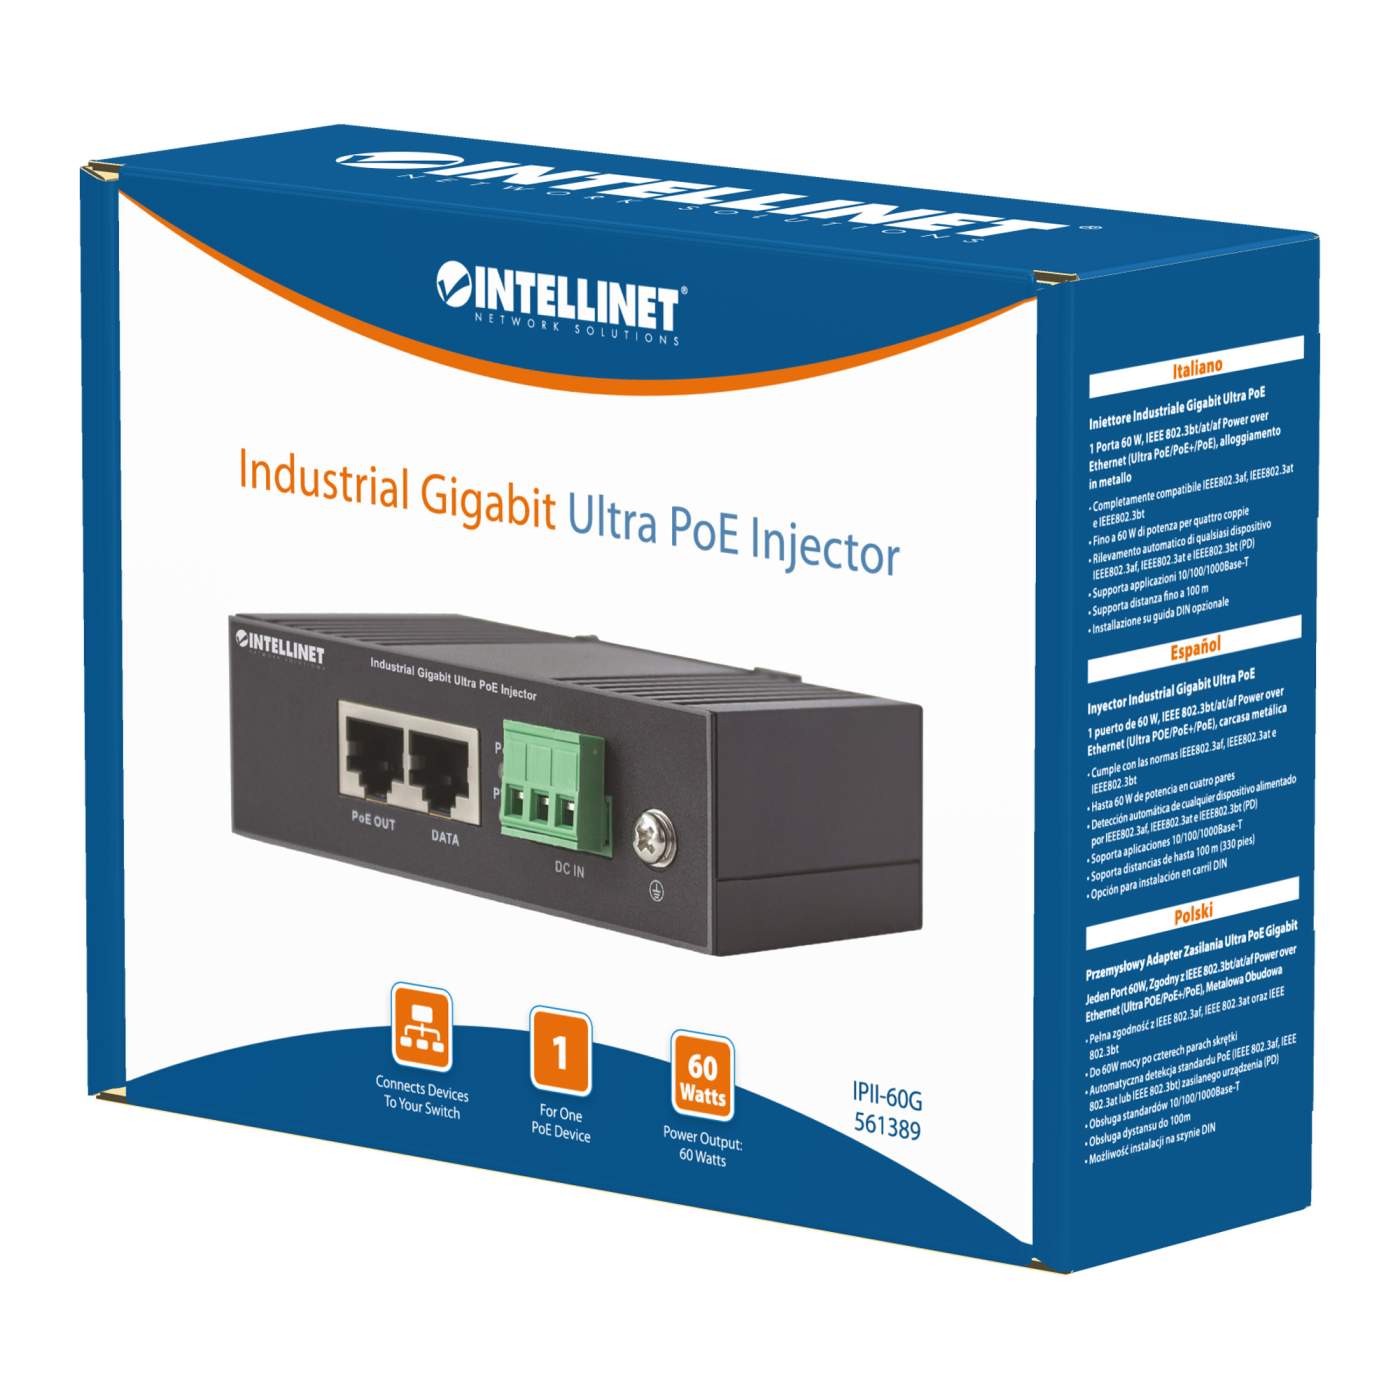 Industrial Gigabit Ultra PoE Injector Packaging Image 2